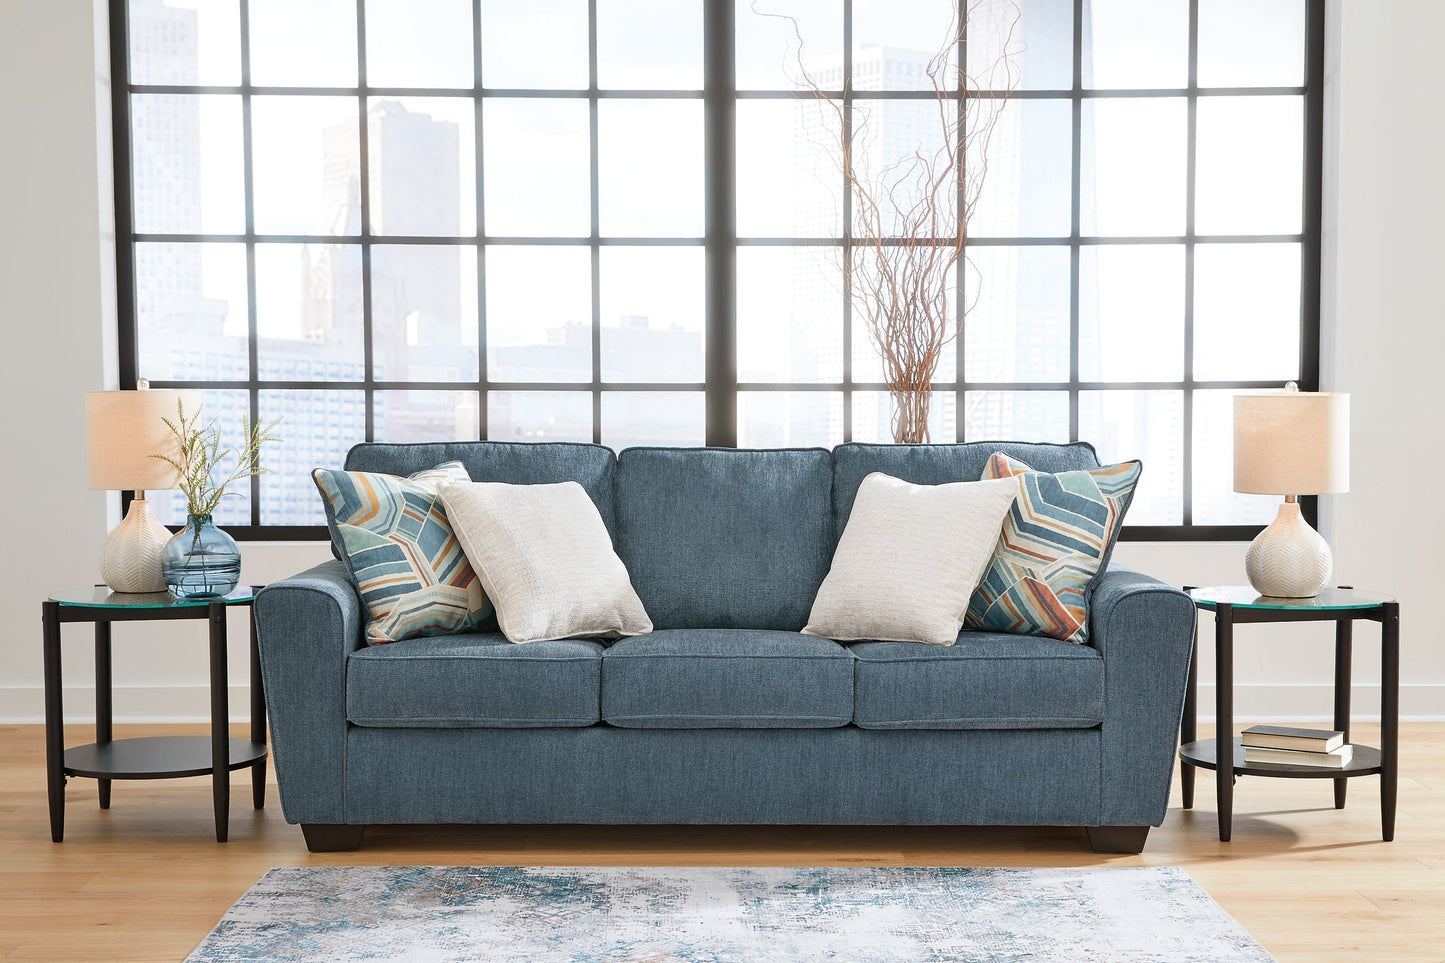 Cashton Queen Sofa Sleeper at Towne & Country Furniture (AL) furniture, home furniture, home decor, sofa, bedding